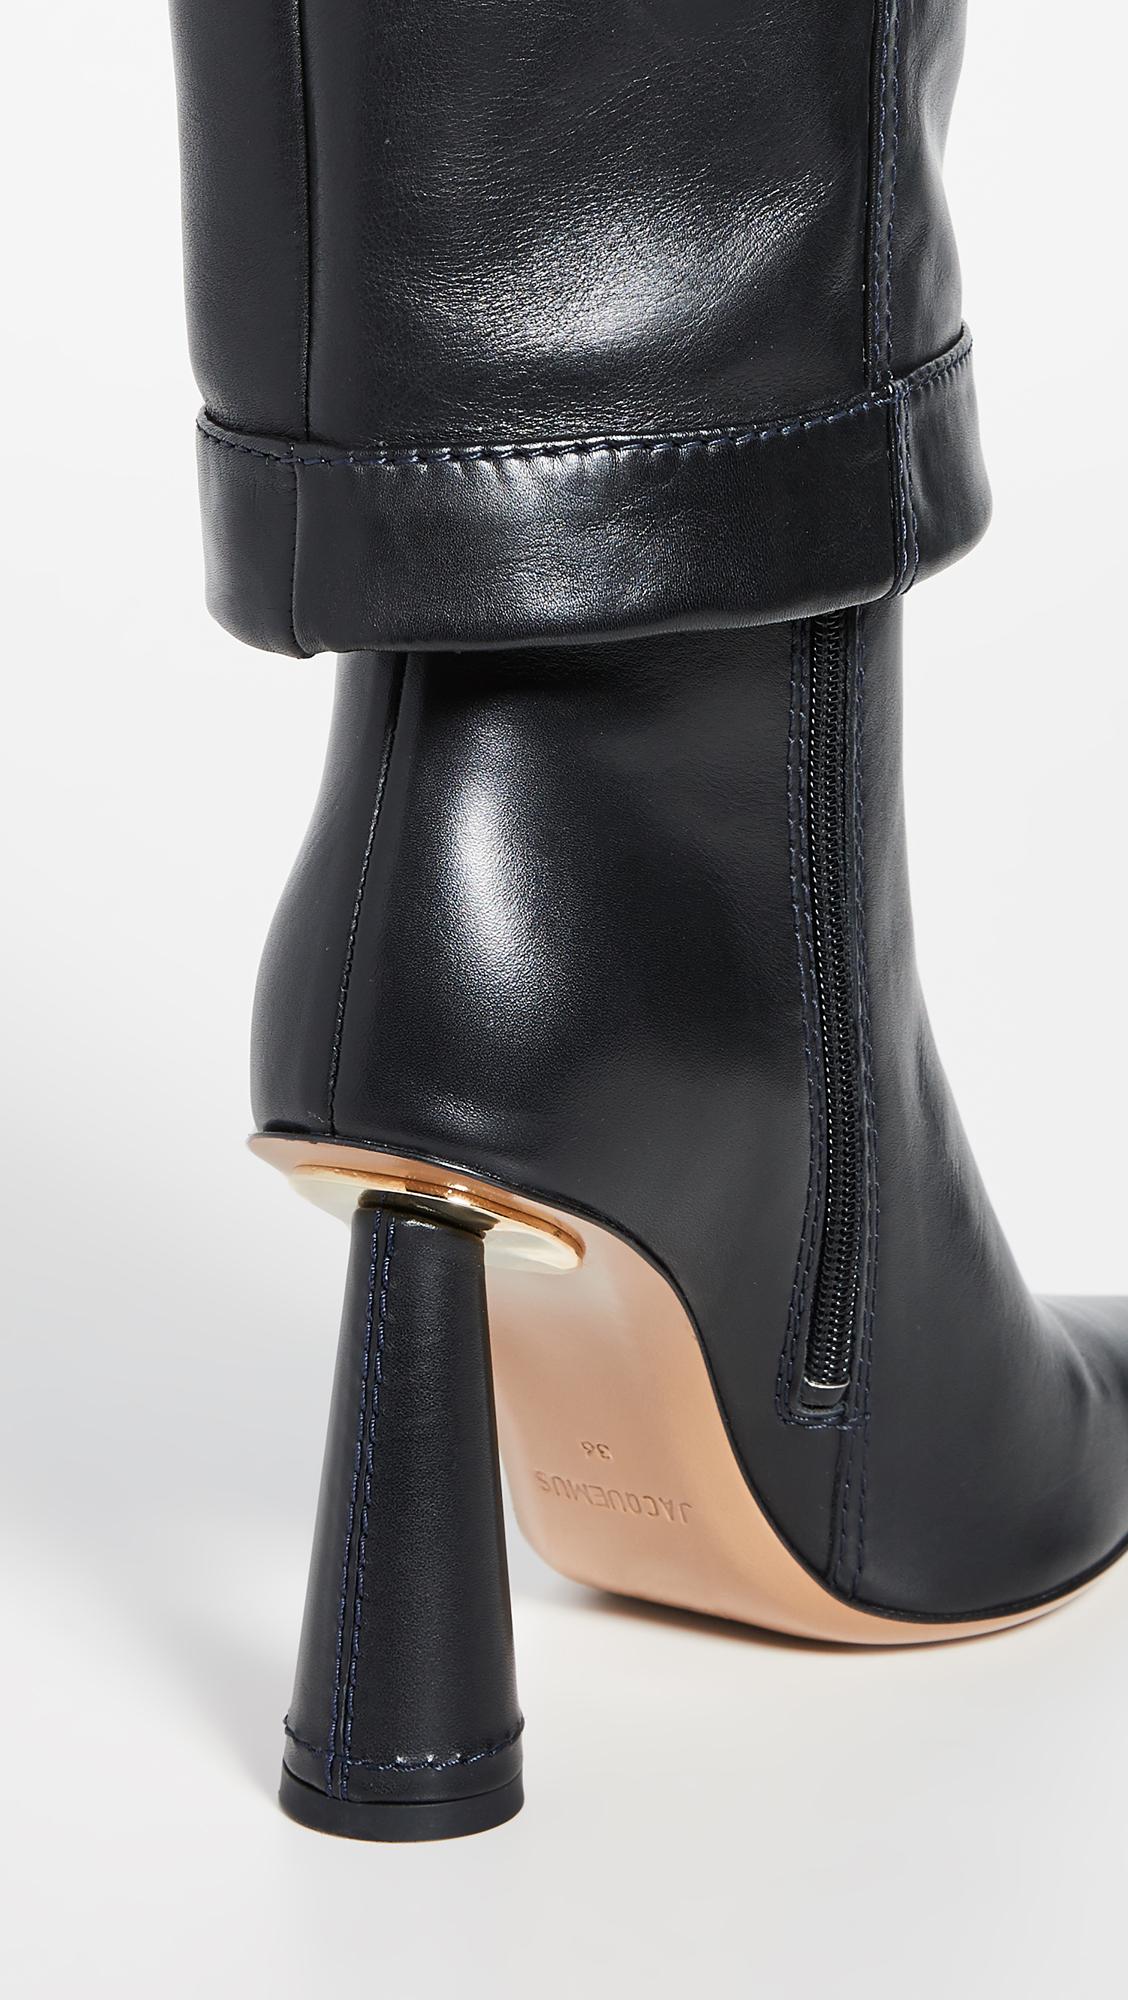 Jacquemus Les Bottes Pantalon Leather Boots in Black - Save 49% - Lyst